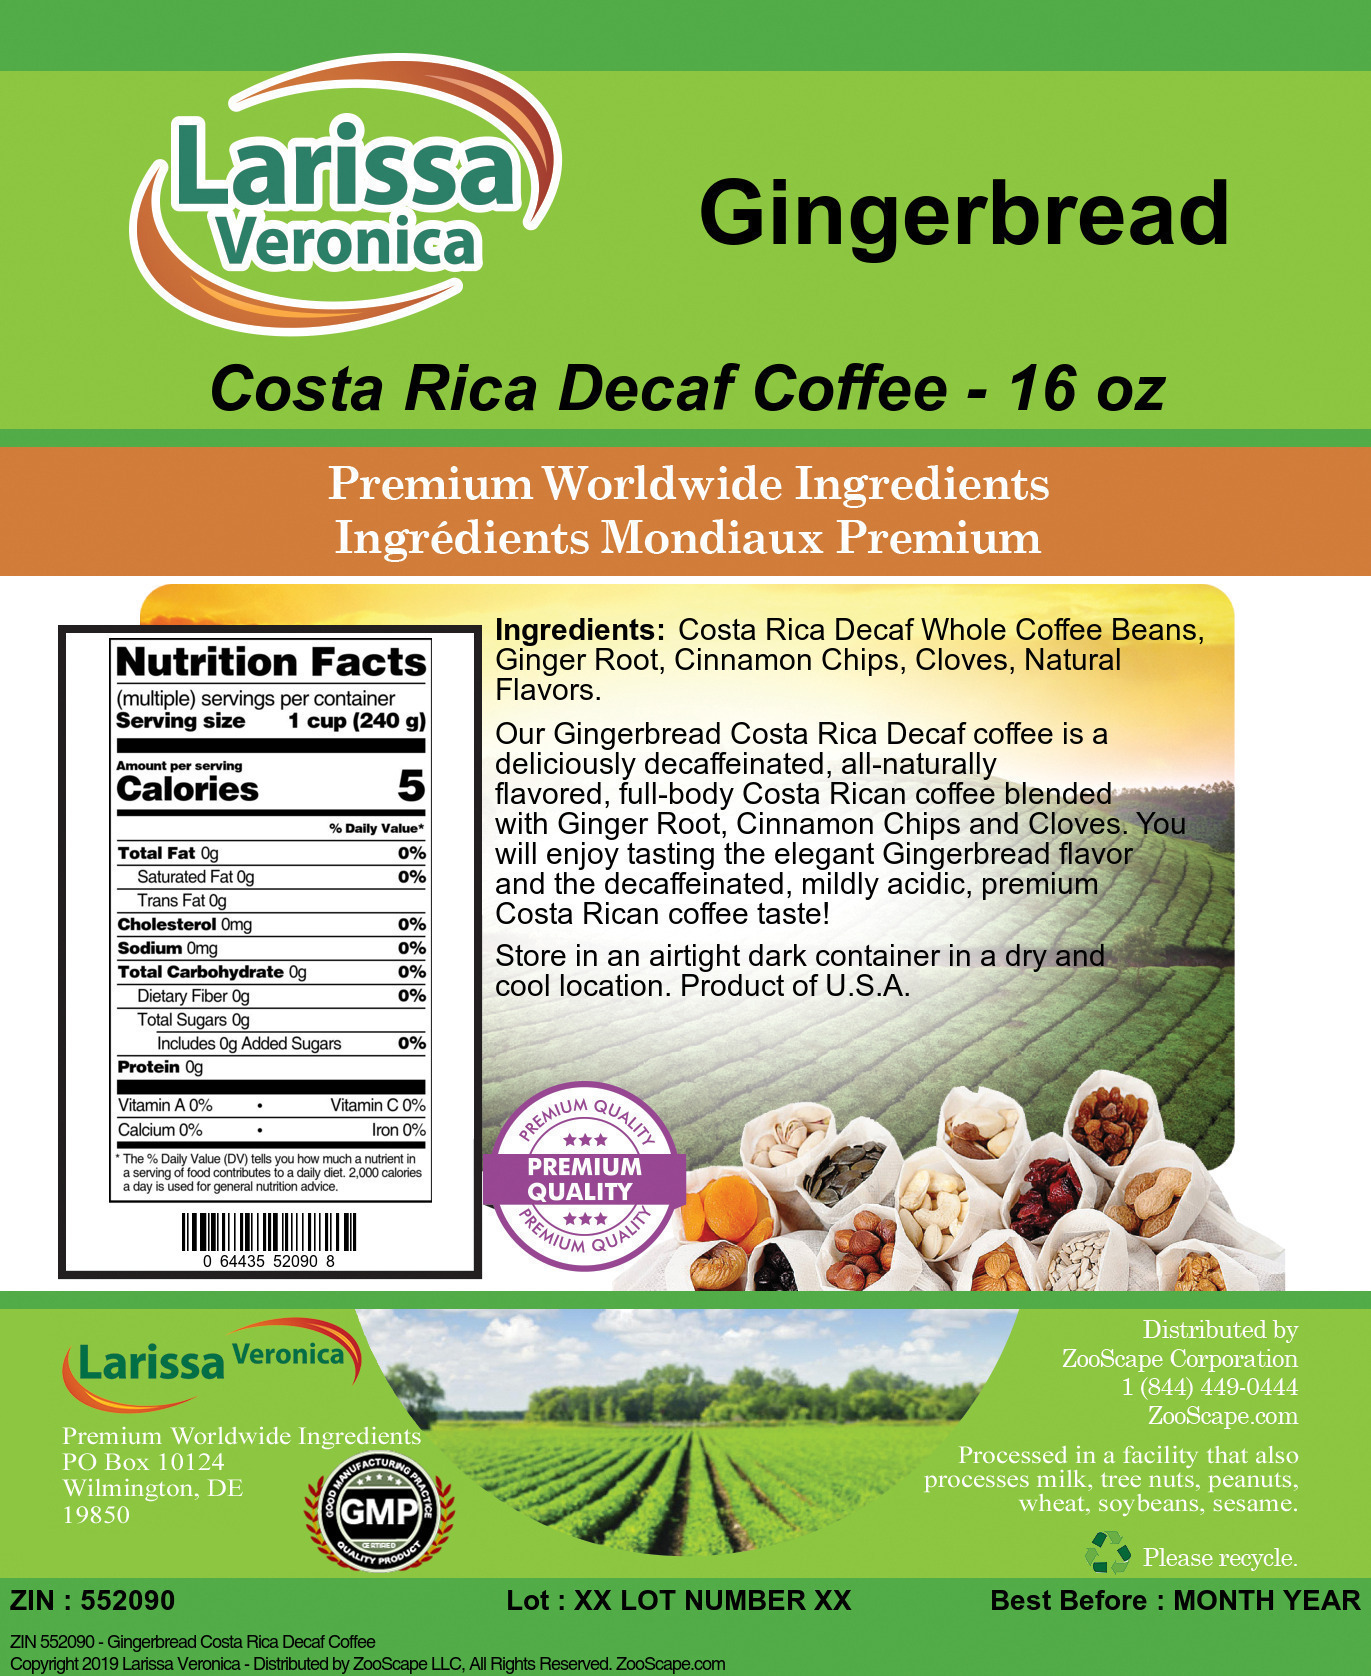 Gingerbread Costa Rica Decaf Coffee - Label